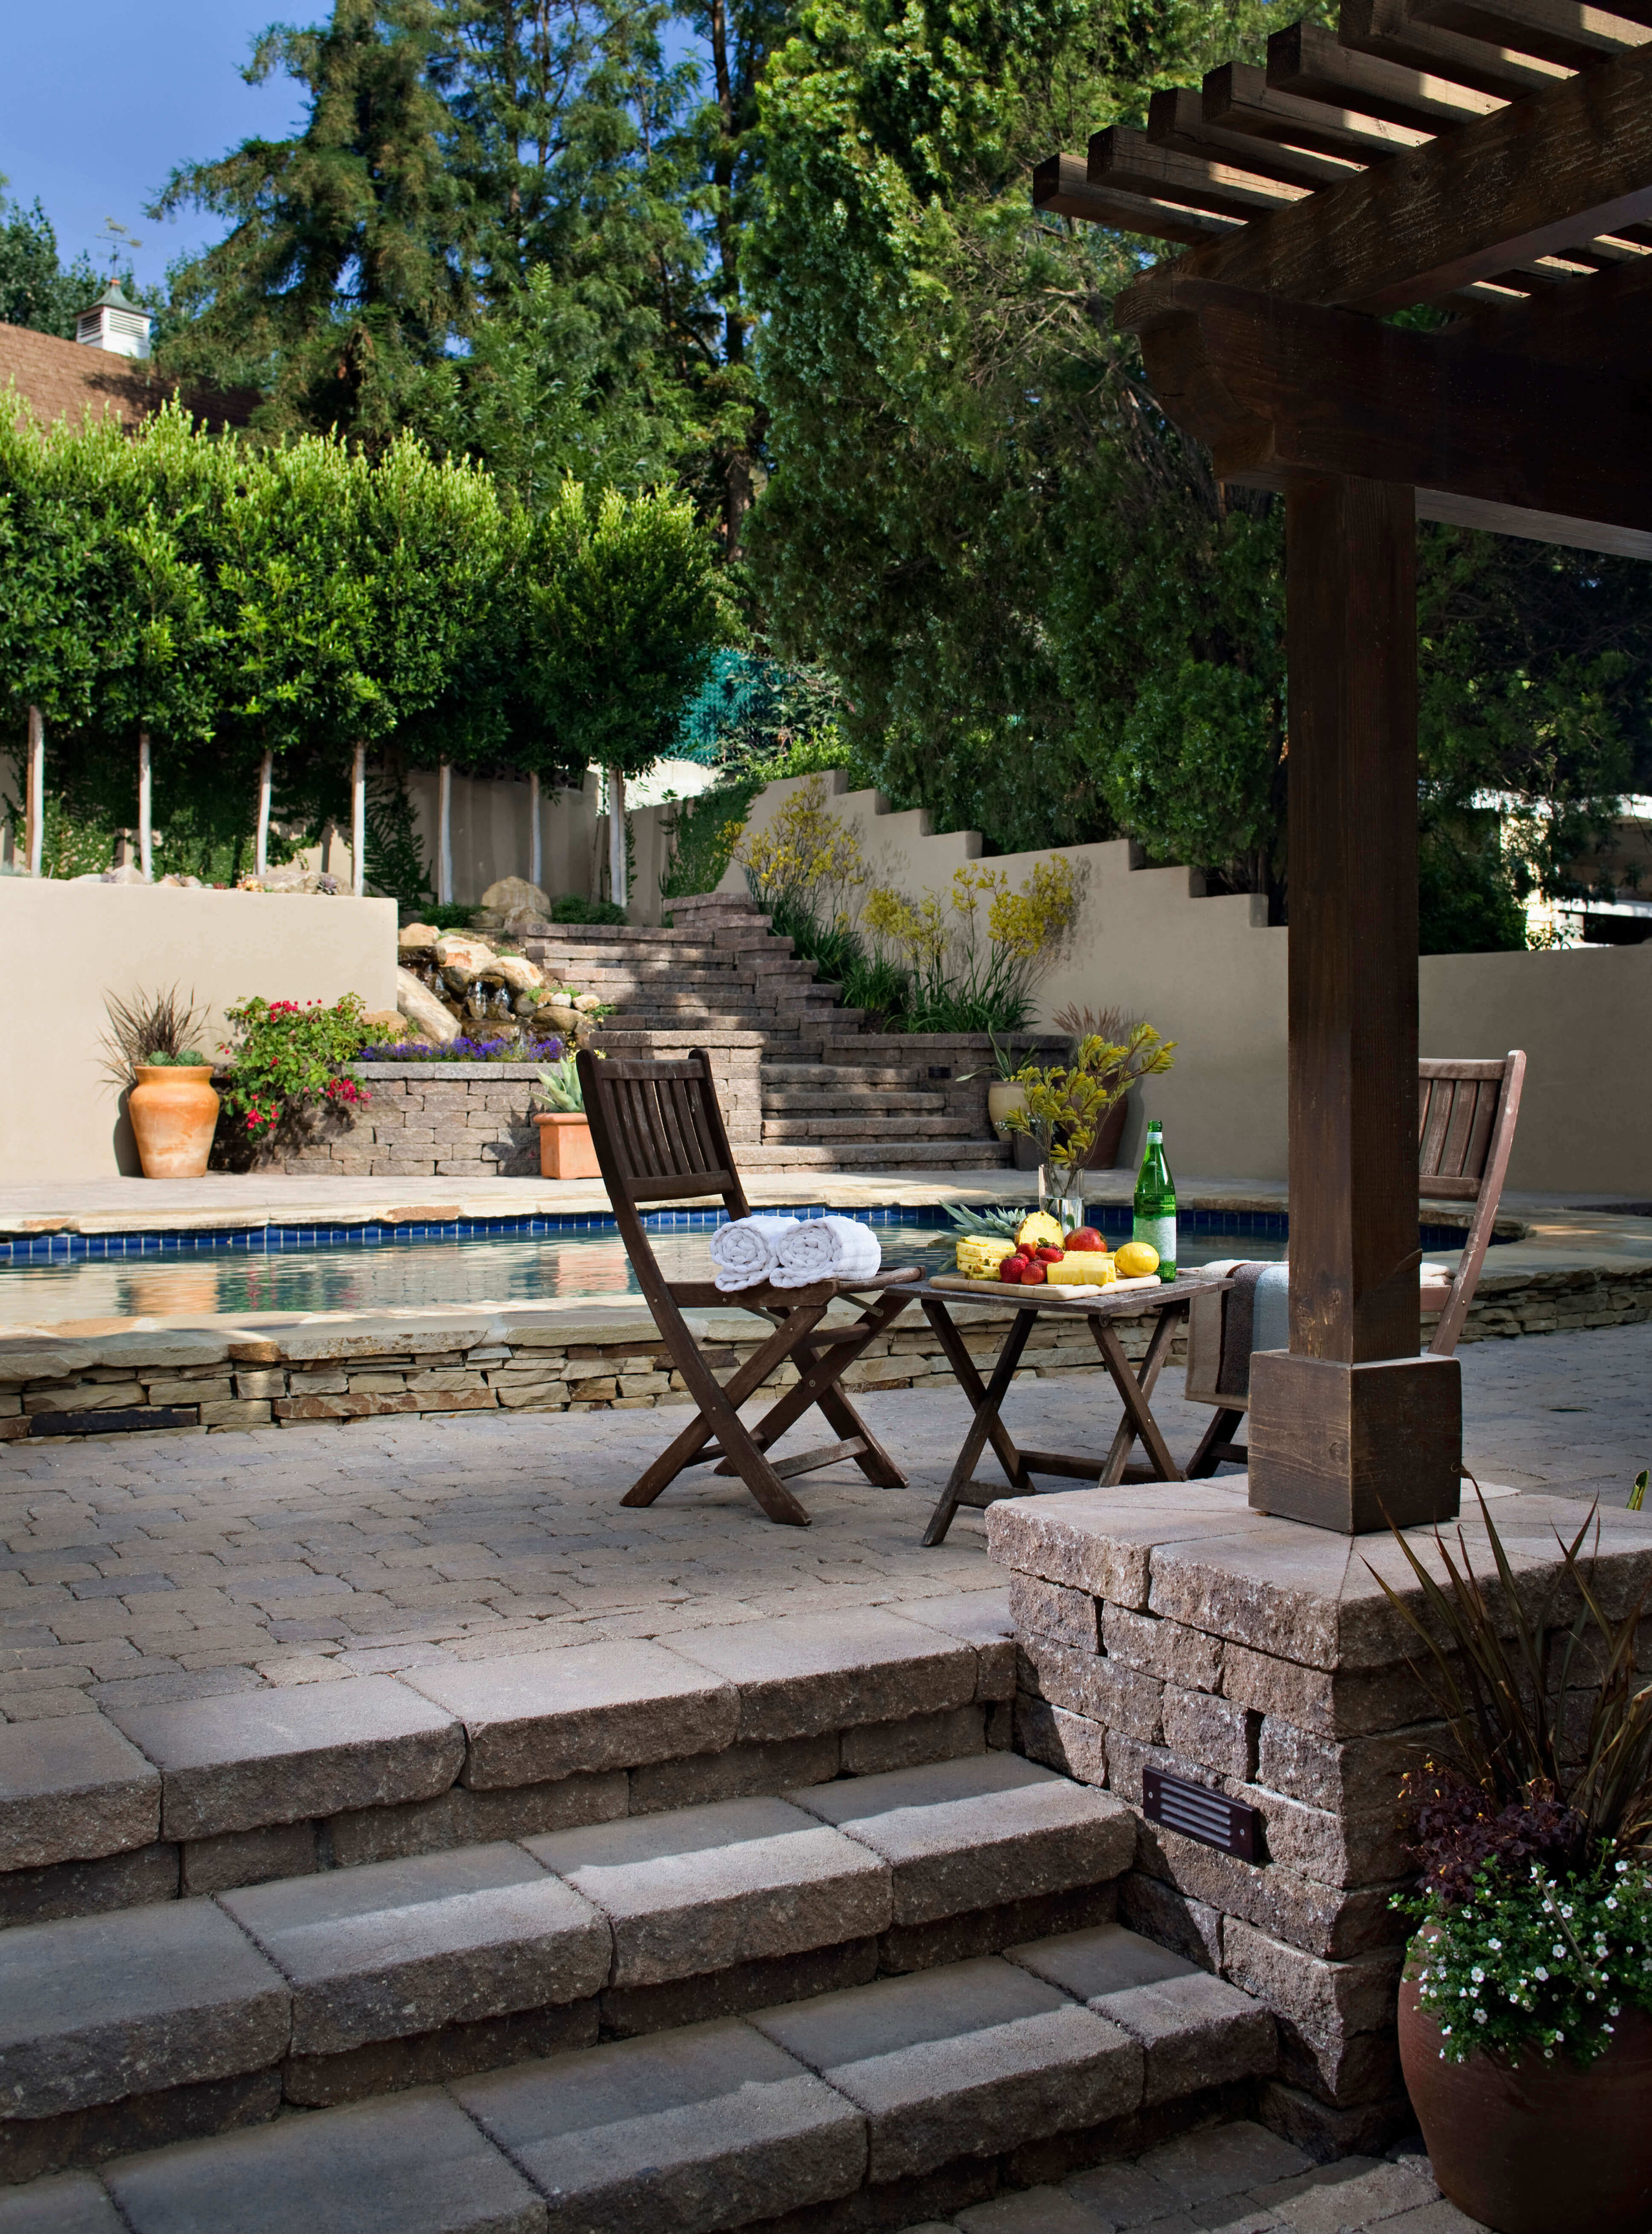 stone hardscape and patio for a backyard retreat design idea